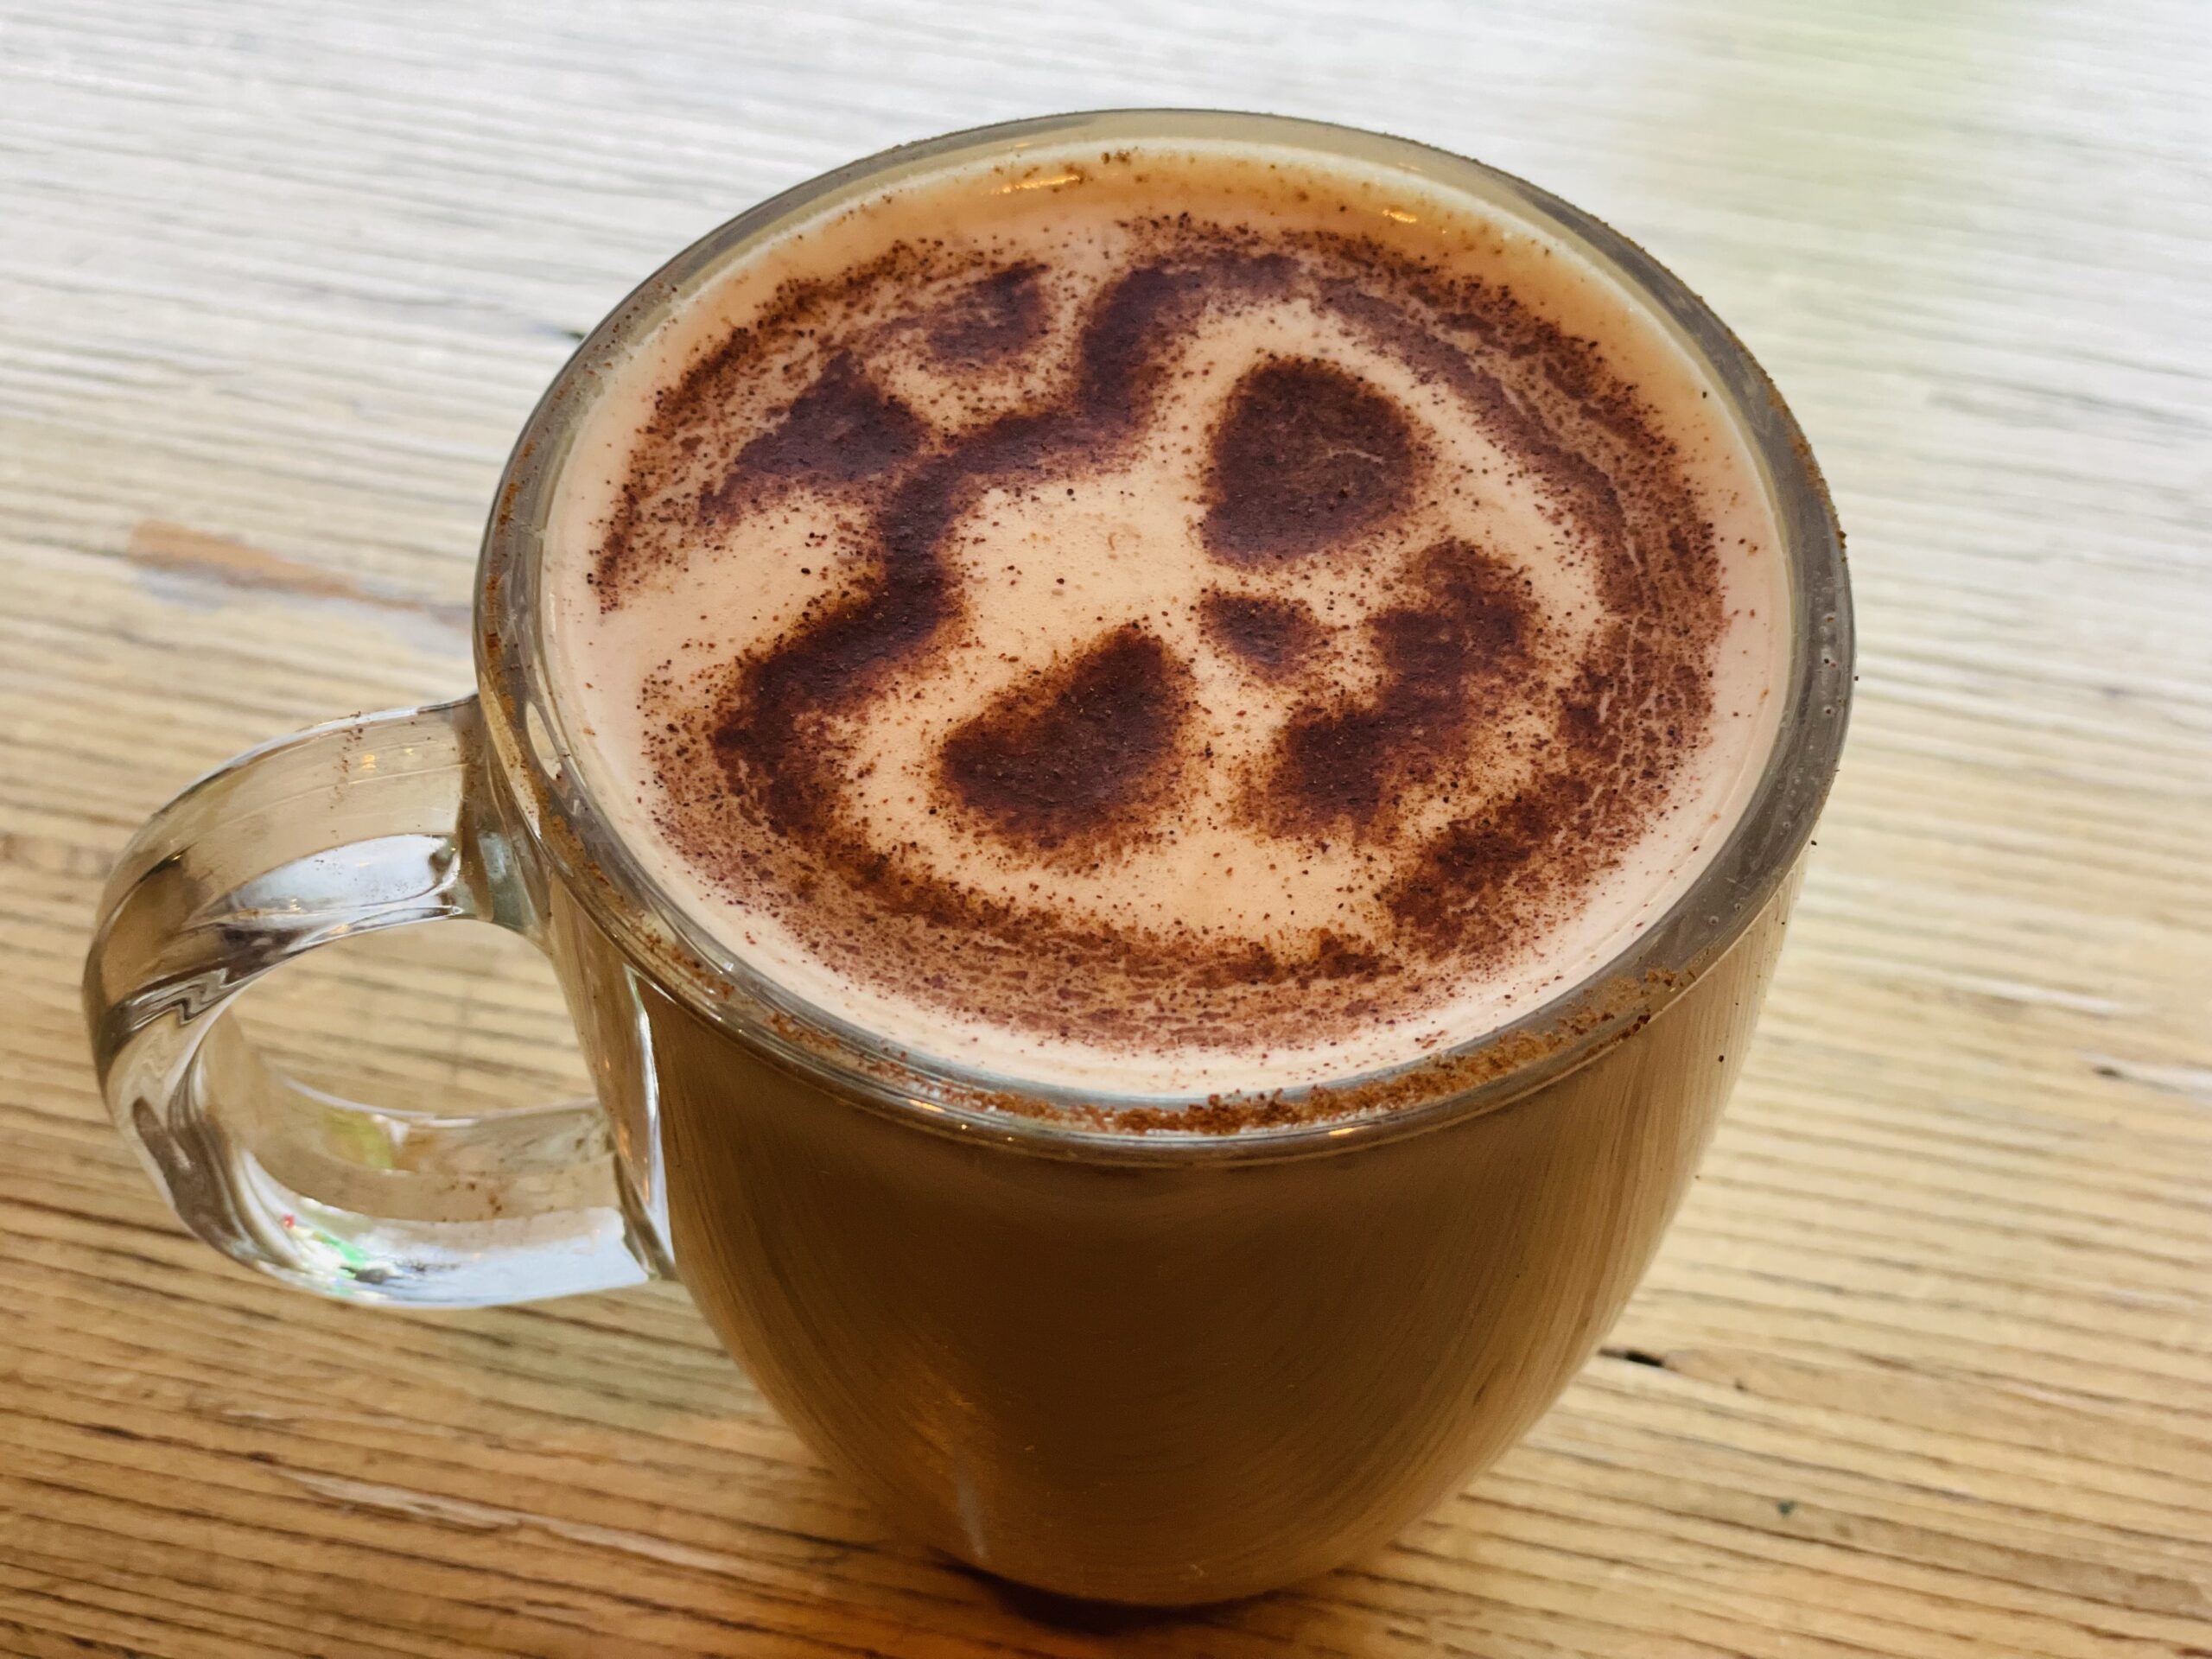 Pumpkin pie chai latte includes spicy chai, pumpkin pie syrup, espresso, milk and is topped with cinnamon. Crooks Coffee, Santa Rosa. (Mya Constantino)